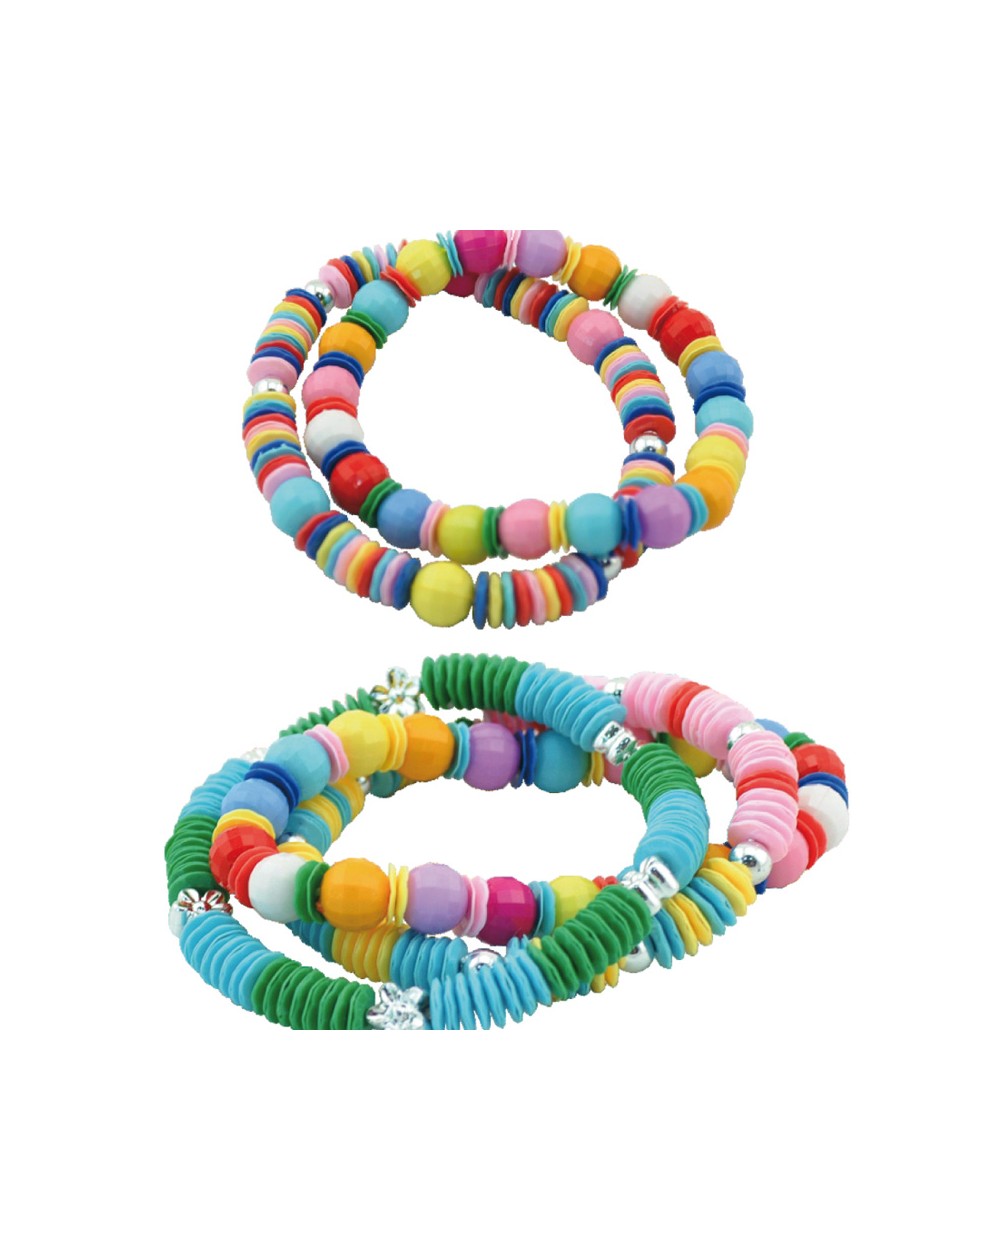 Sequin bracelets